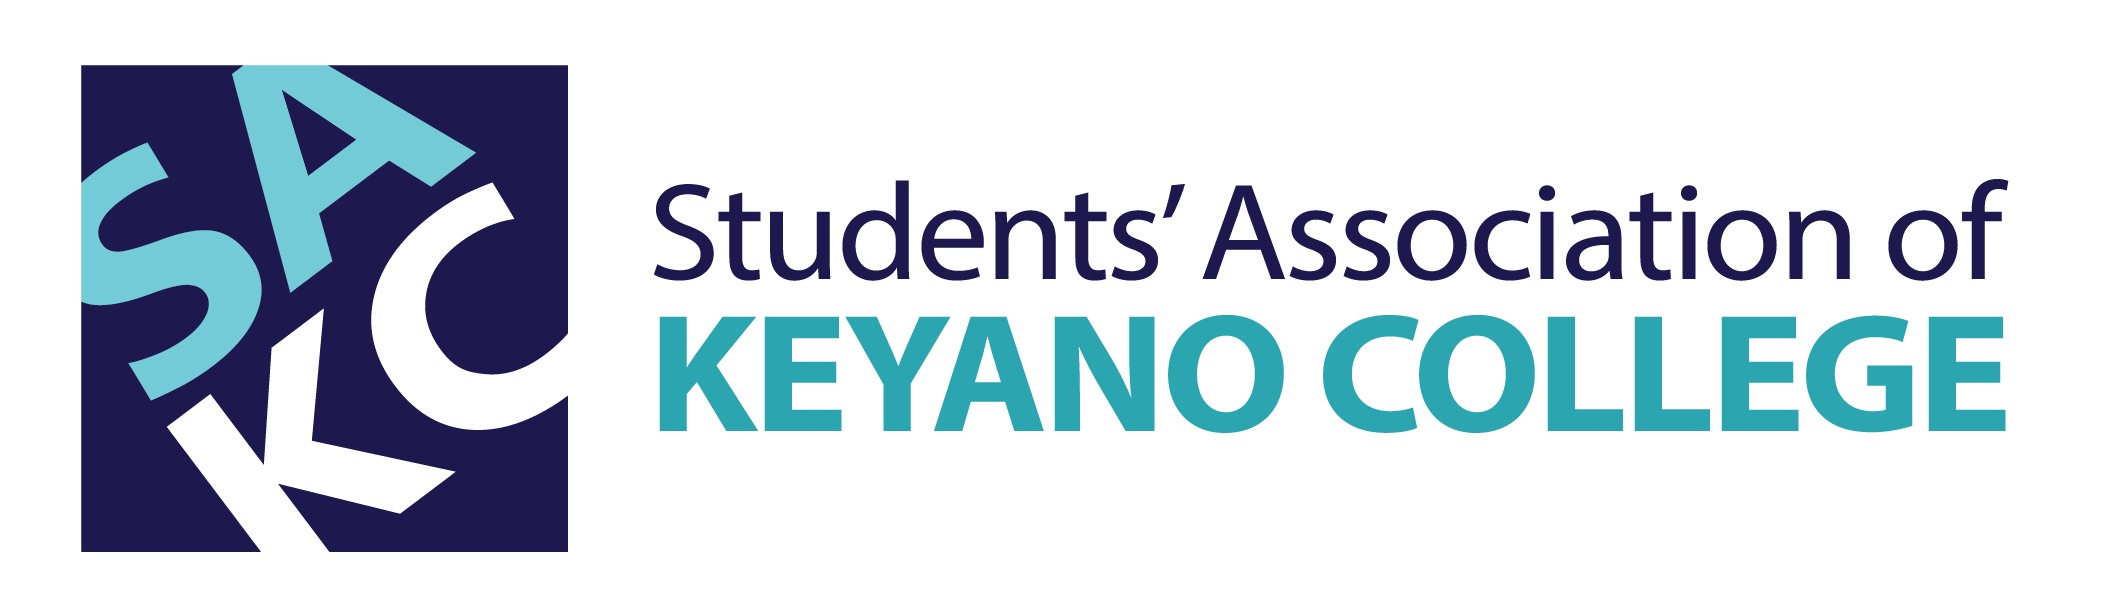 Students Association of Keyano College